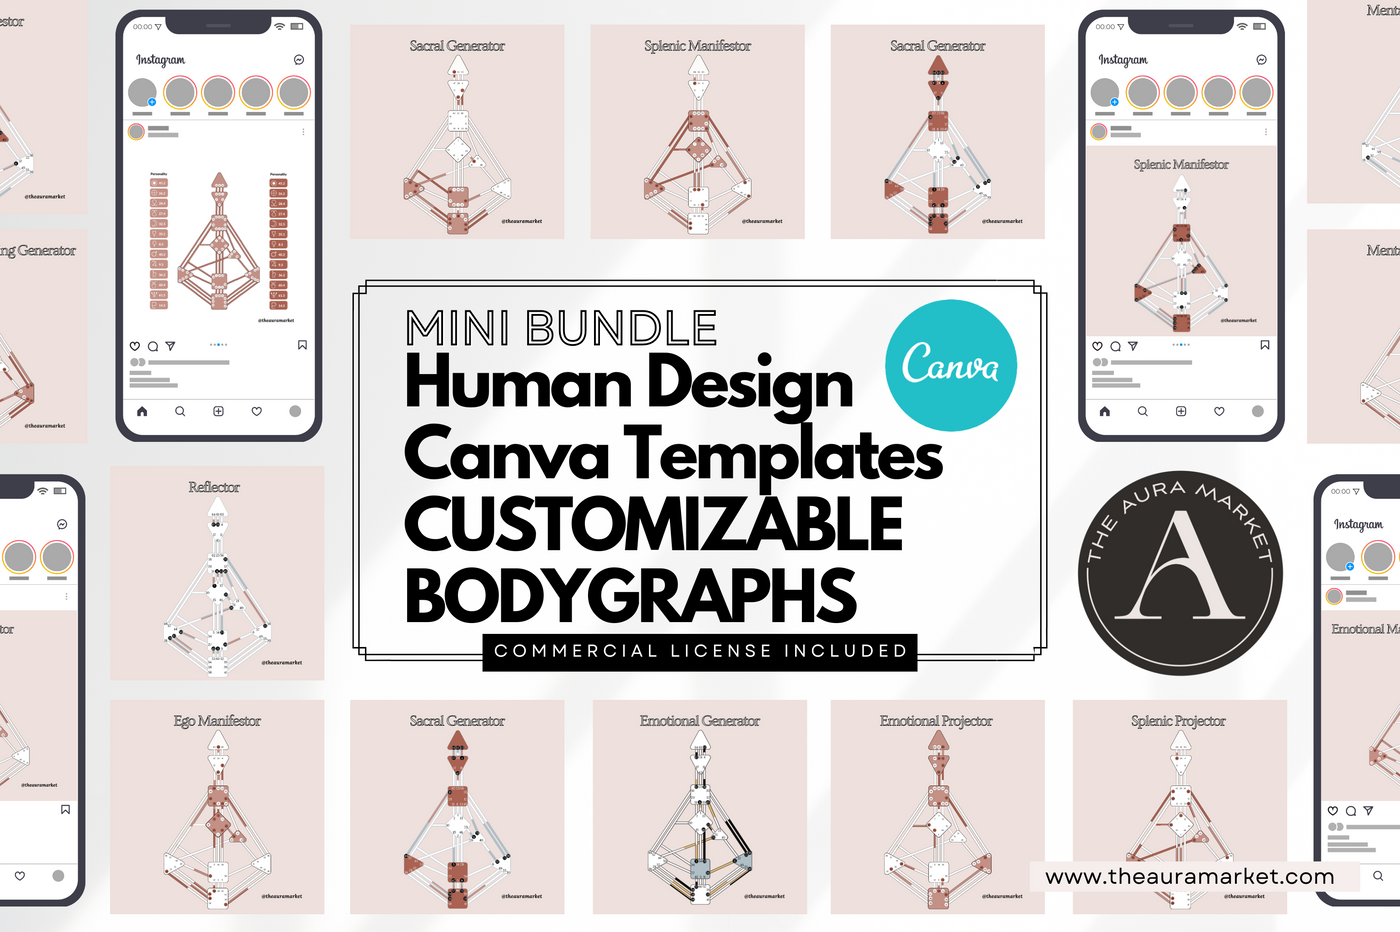 Digital Mini Bundle: Human Design Canva Templates CUSTOMIZABLE BODYGRAPHS